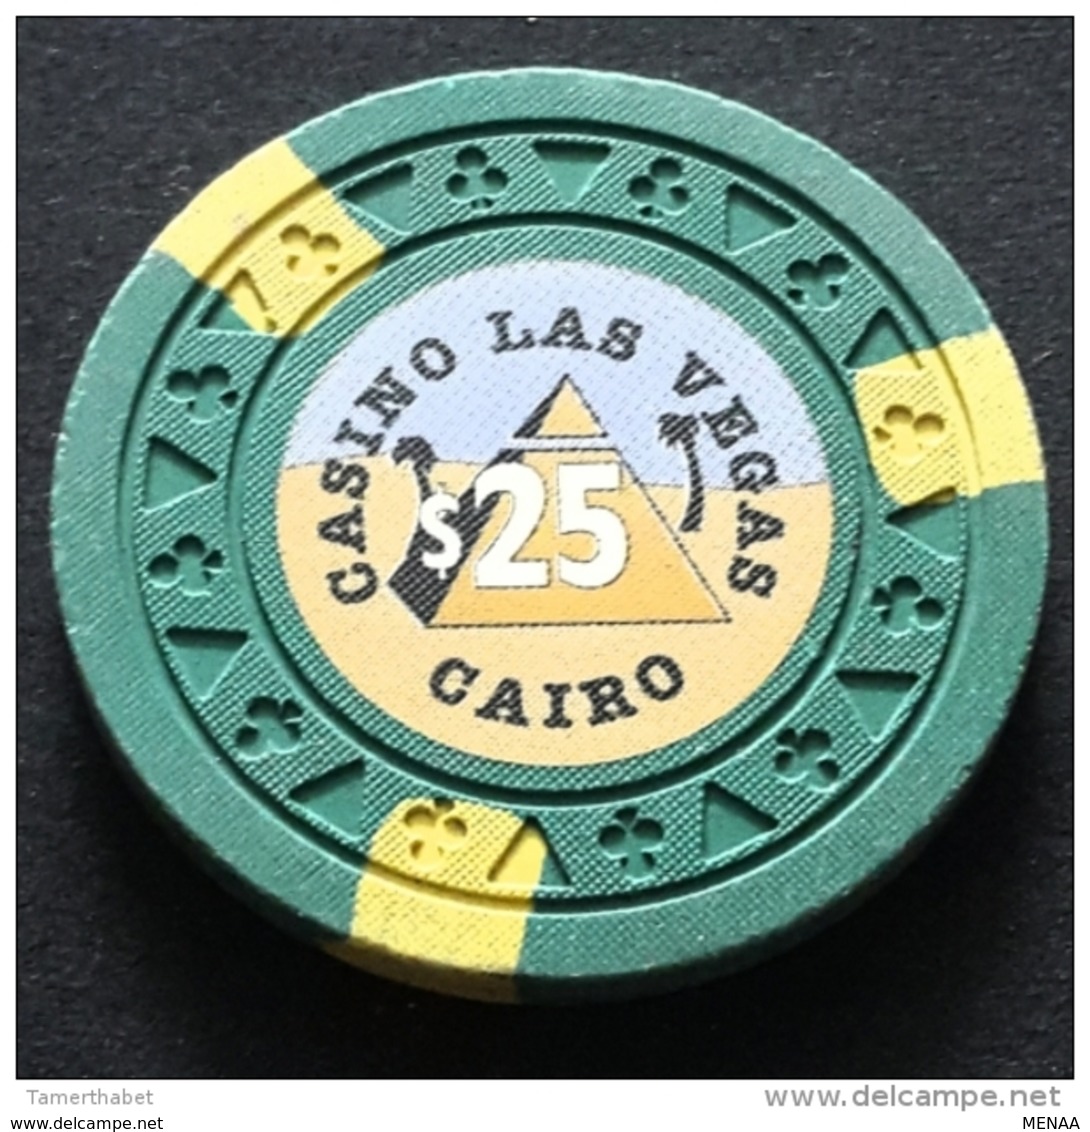 EGYPT / LES VEGAS / CASINO / CAIRO / 25 $ - Casino